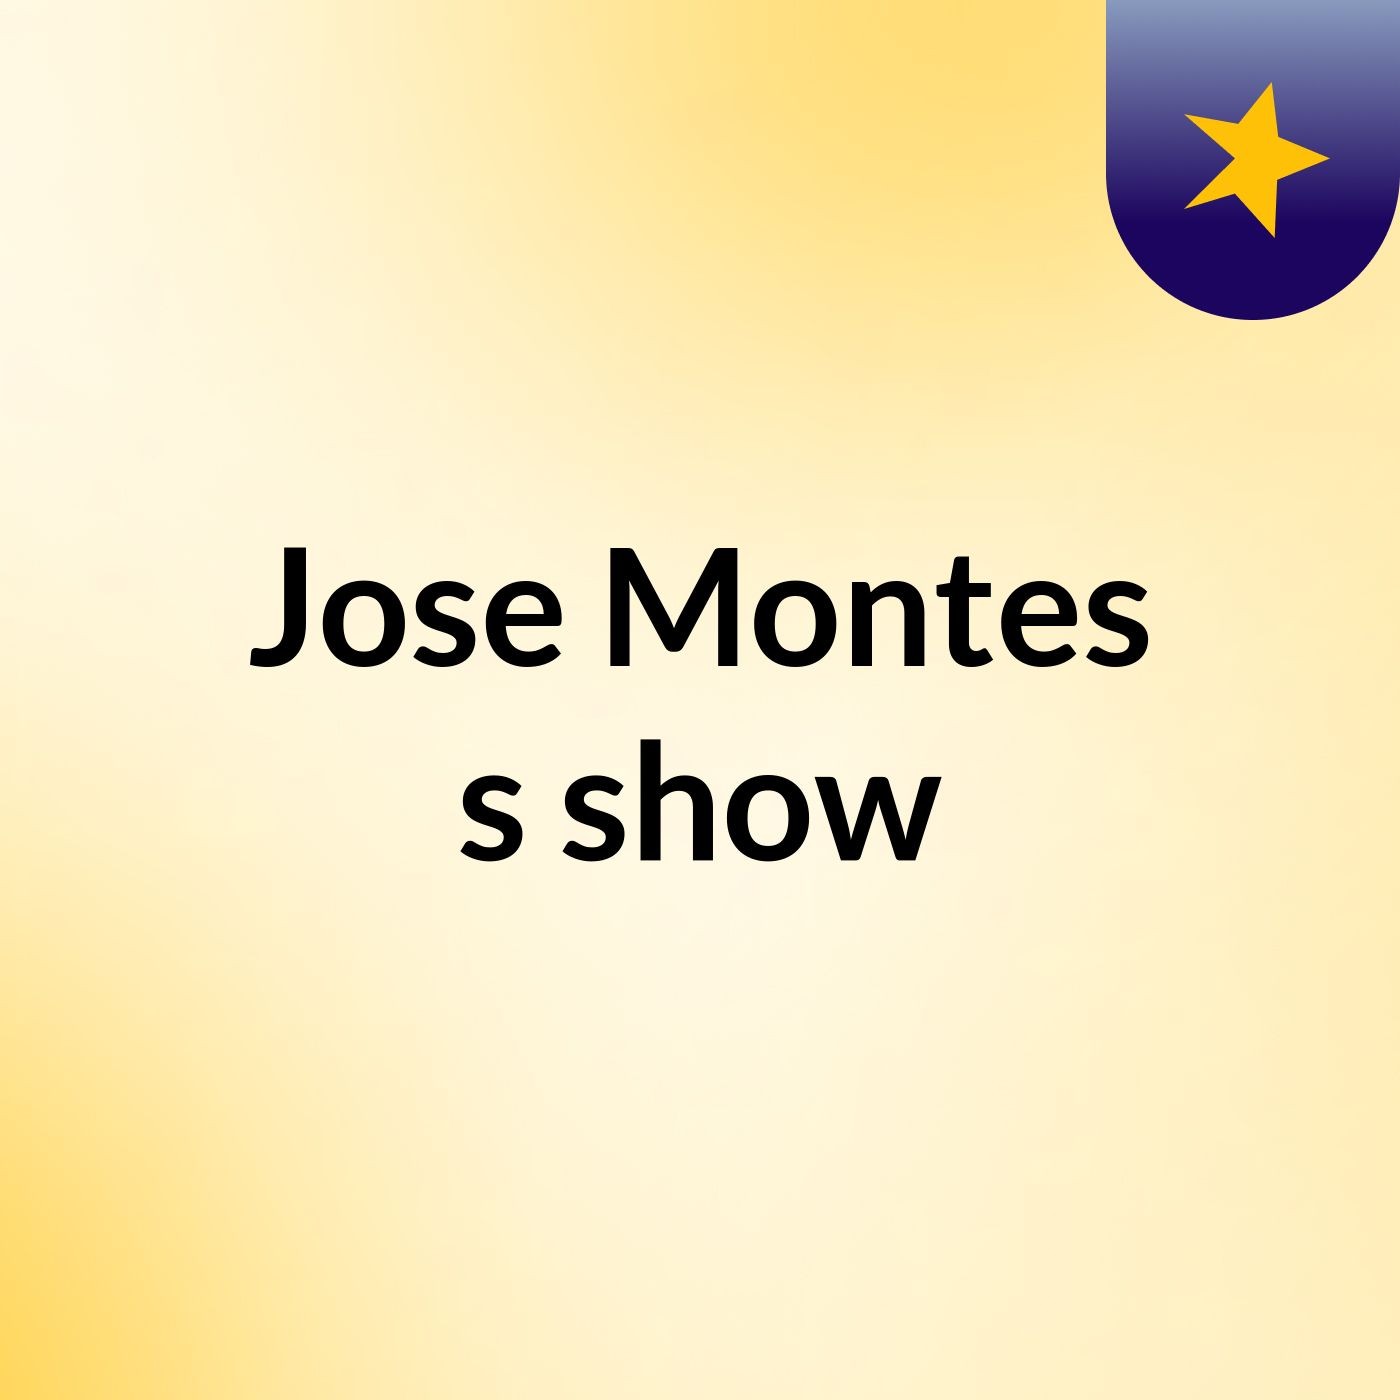 Jose Montes's show